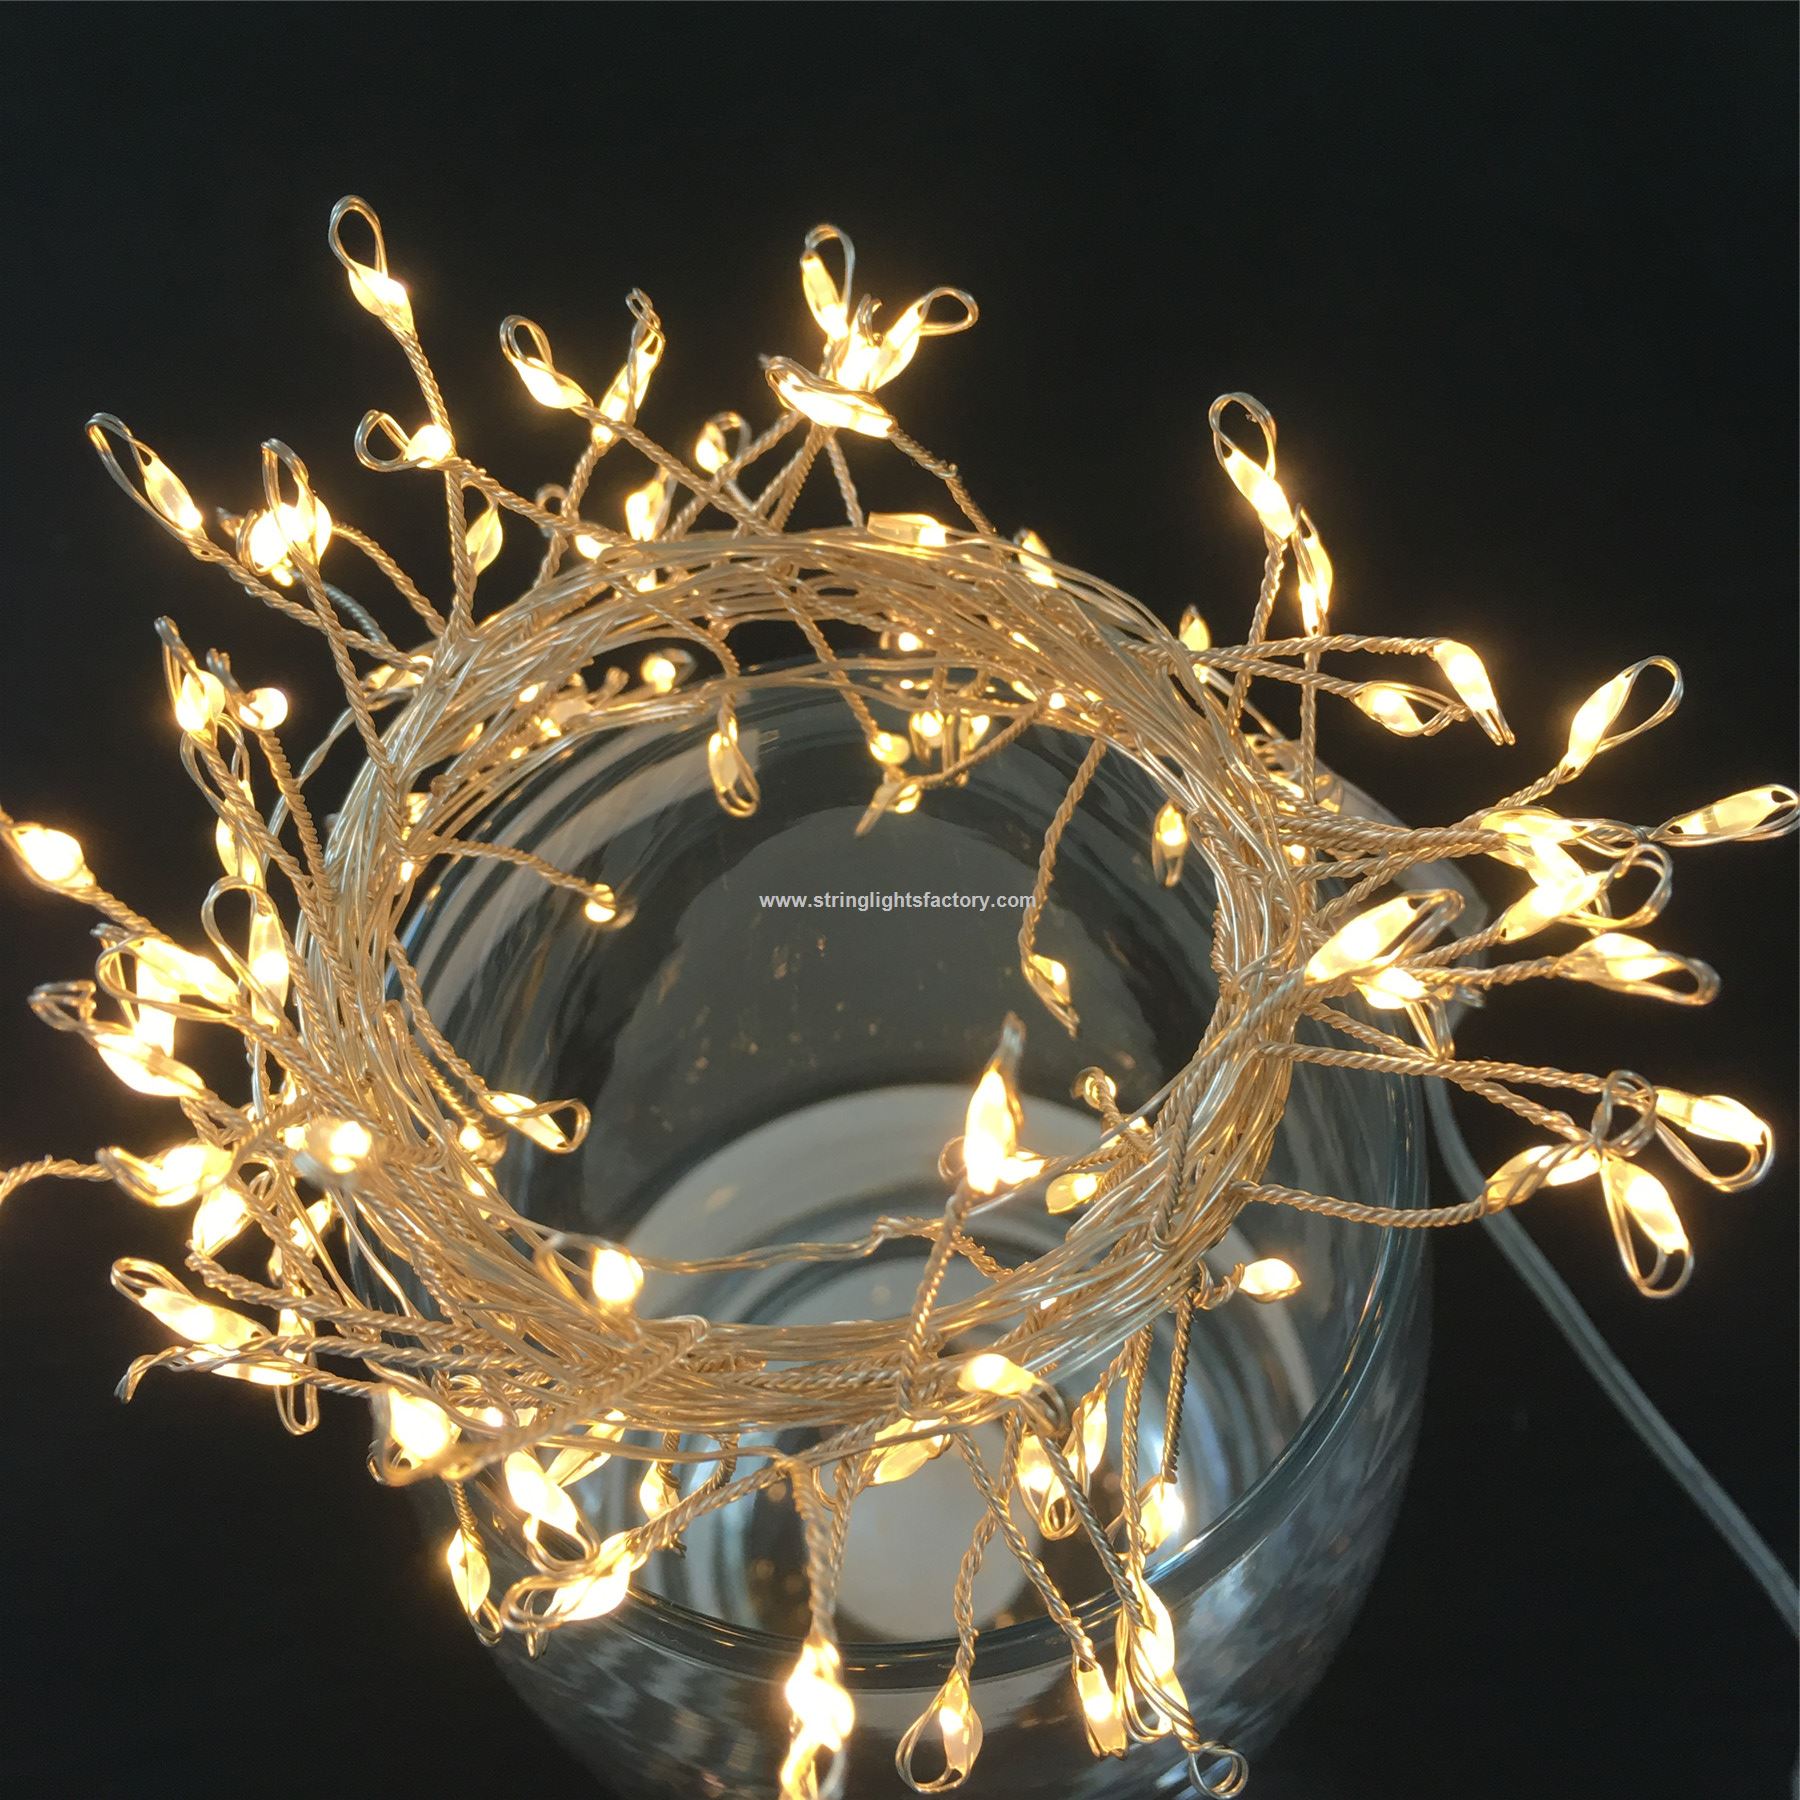 Decorative Lights 100LEDs 9.84FT Fairy Lights Outdoor Strings Lights